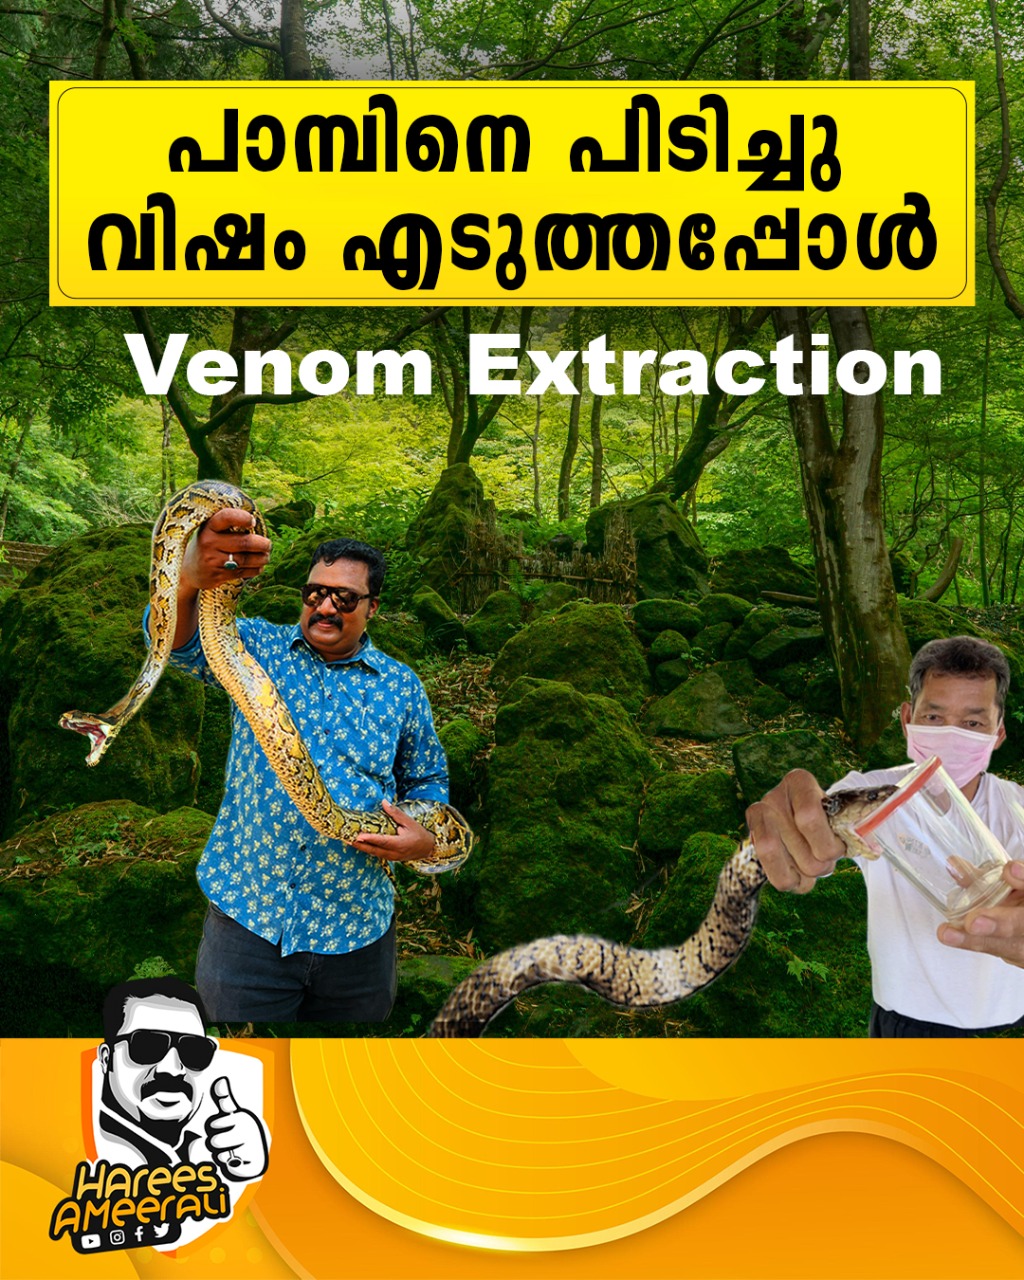 Snake Venom Extraction - Thailand Travel